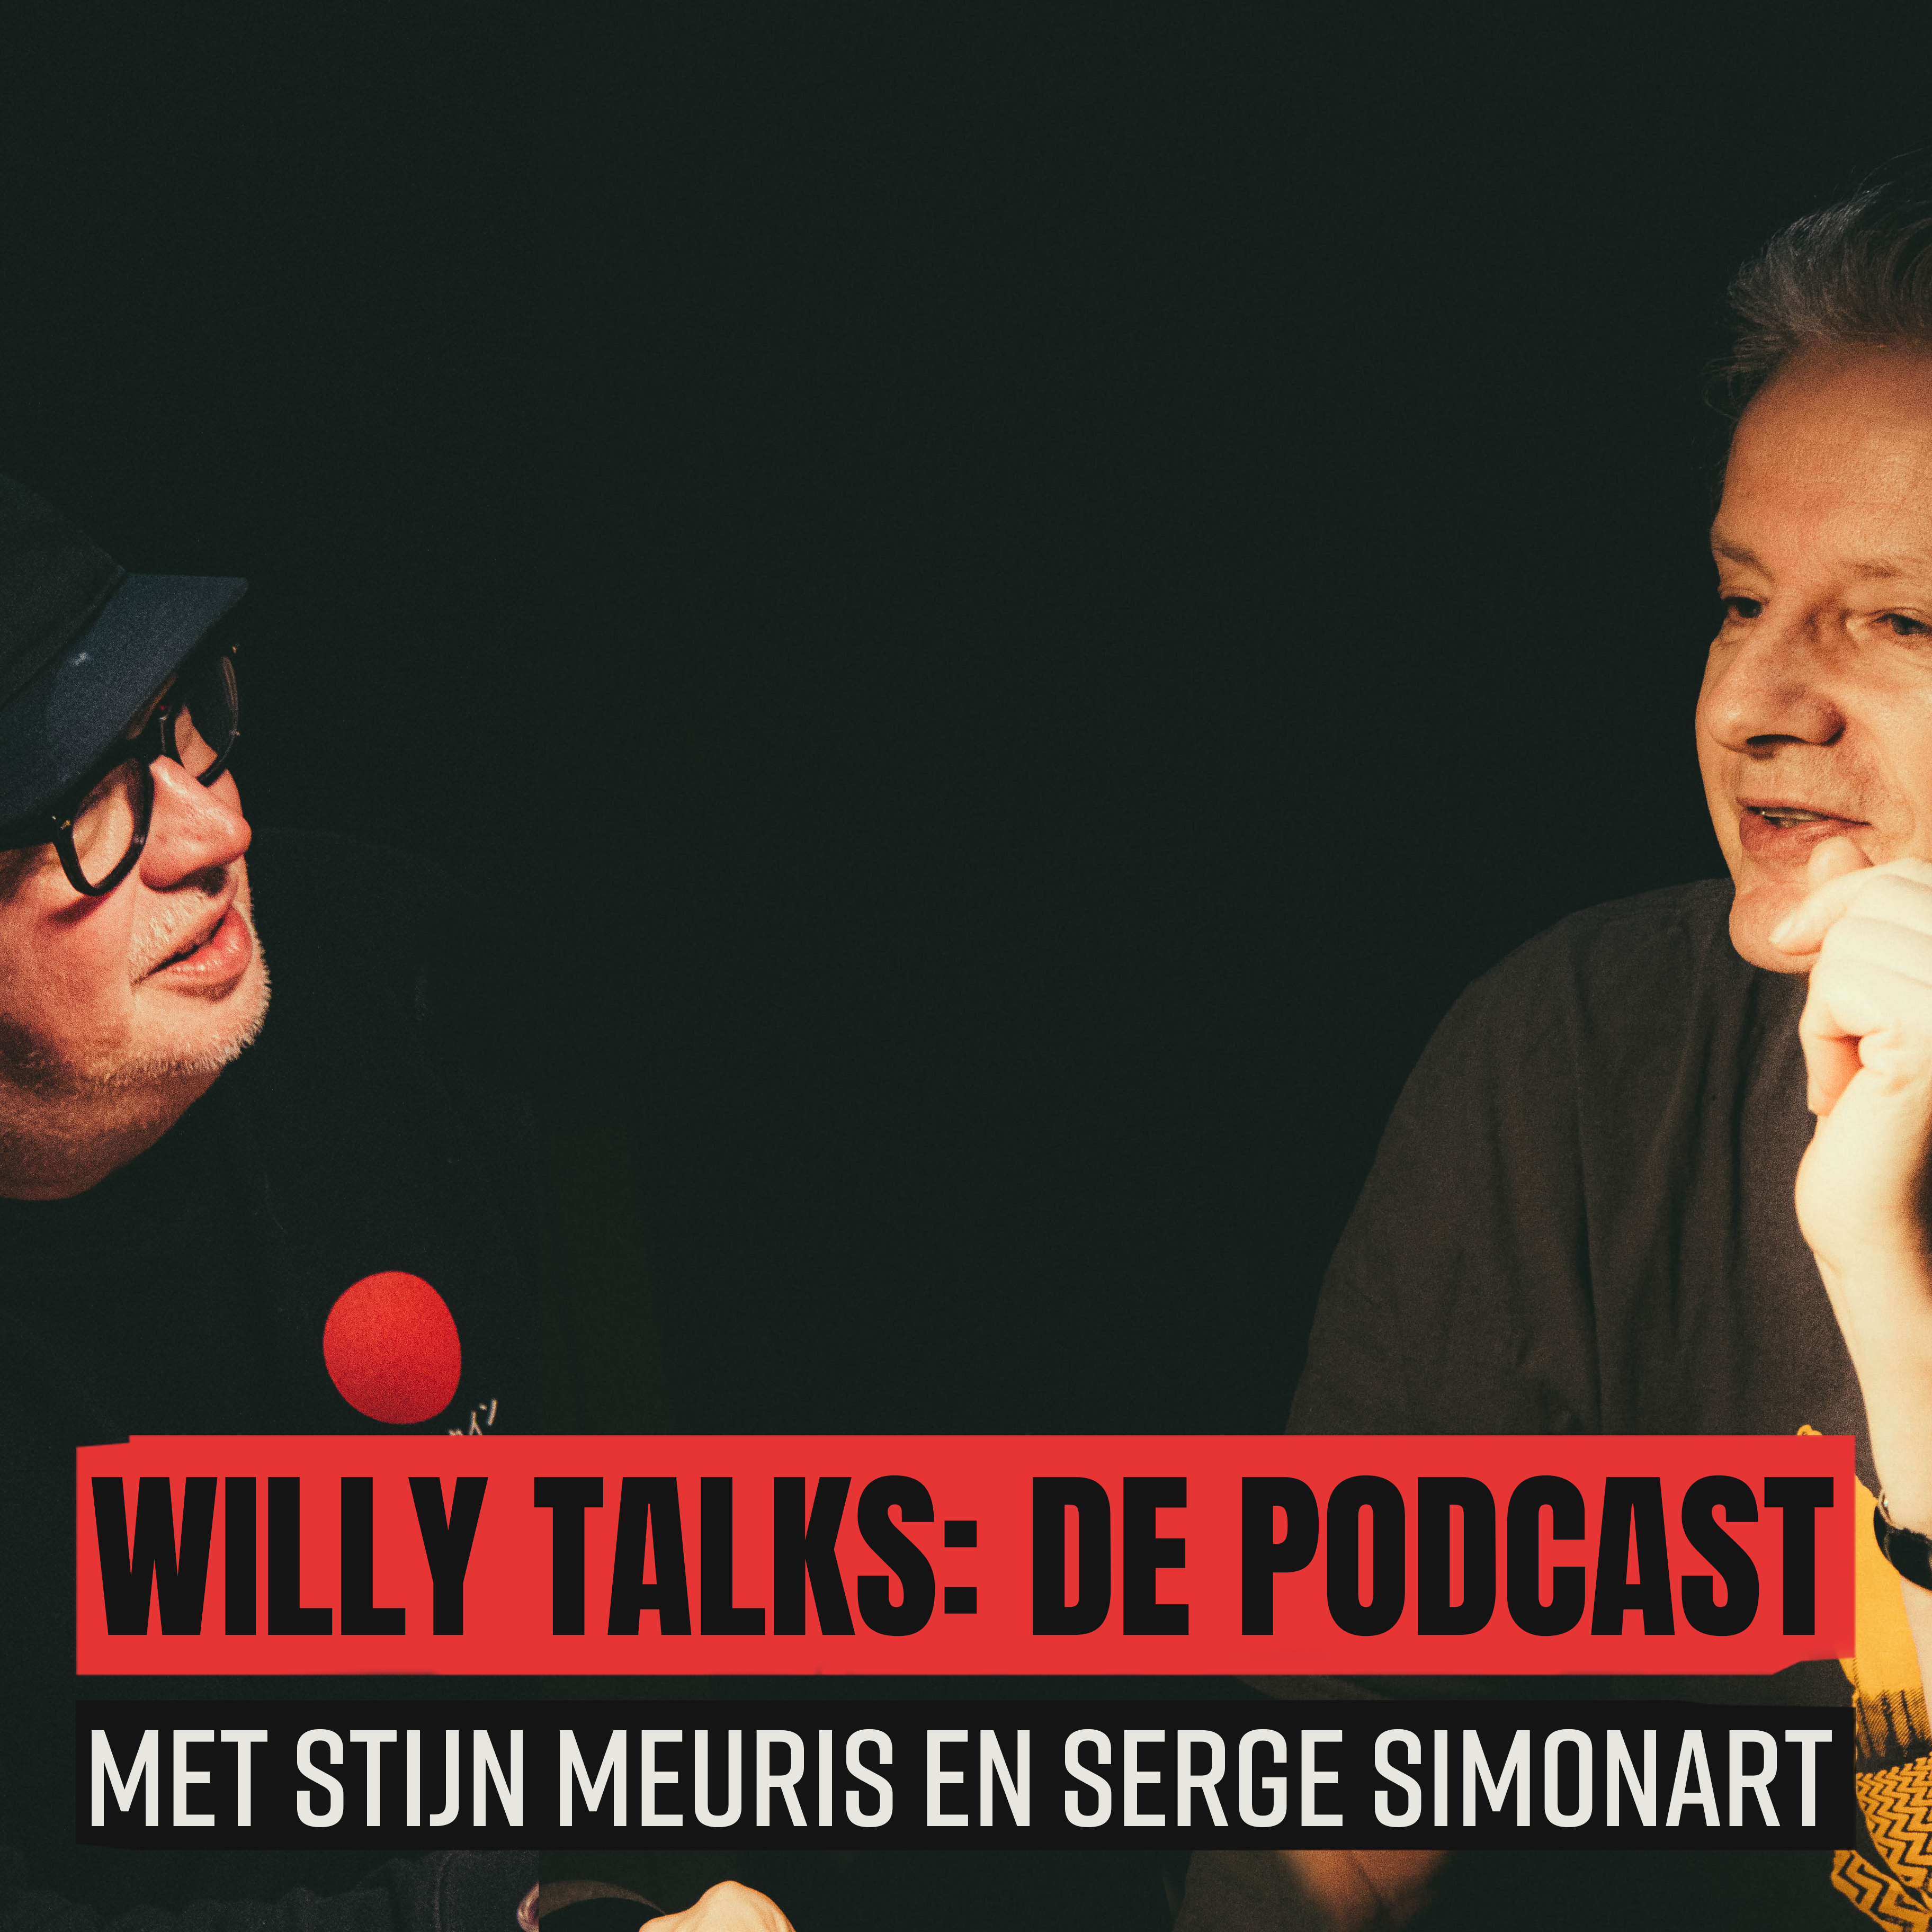 Willy talkts x serge simonart aankondiging